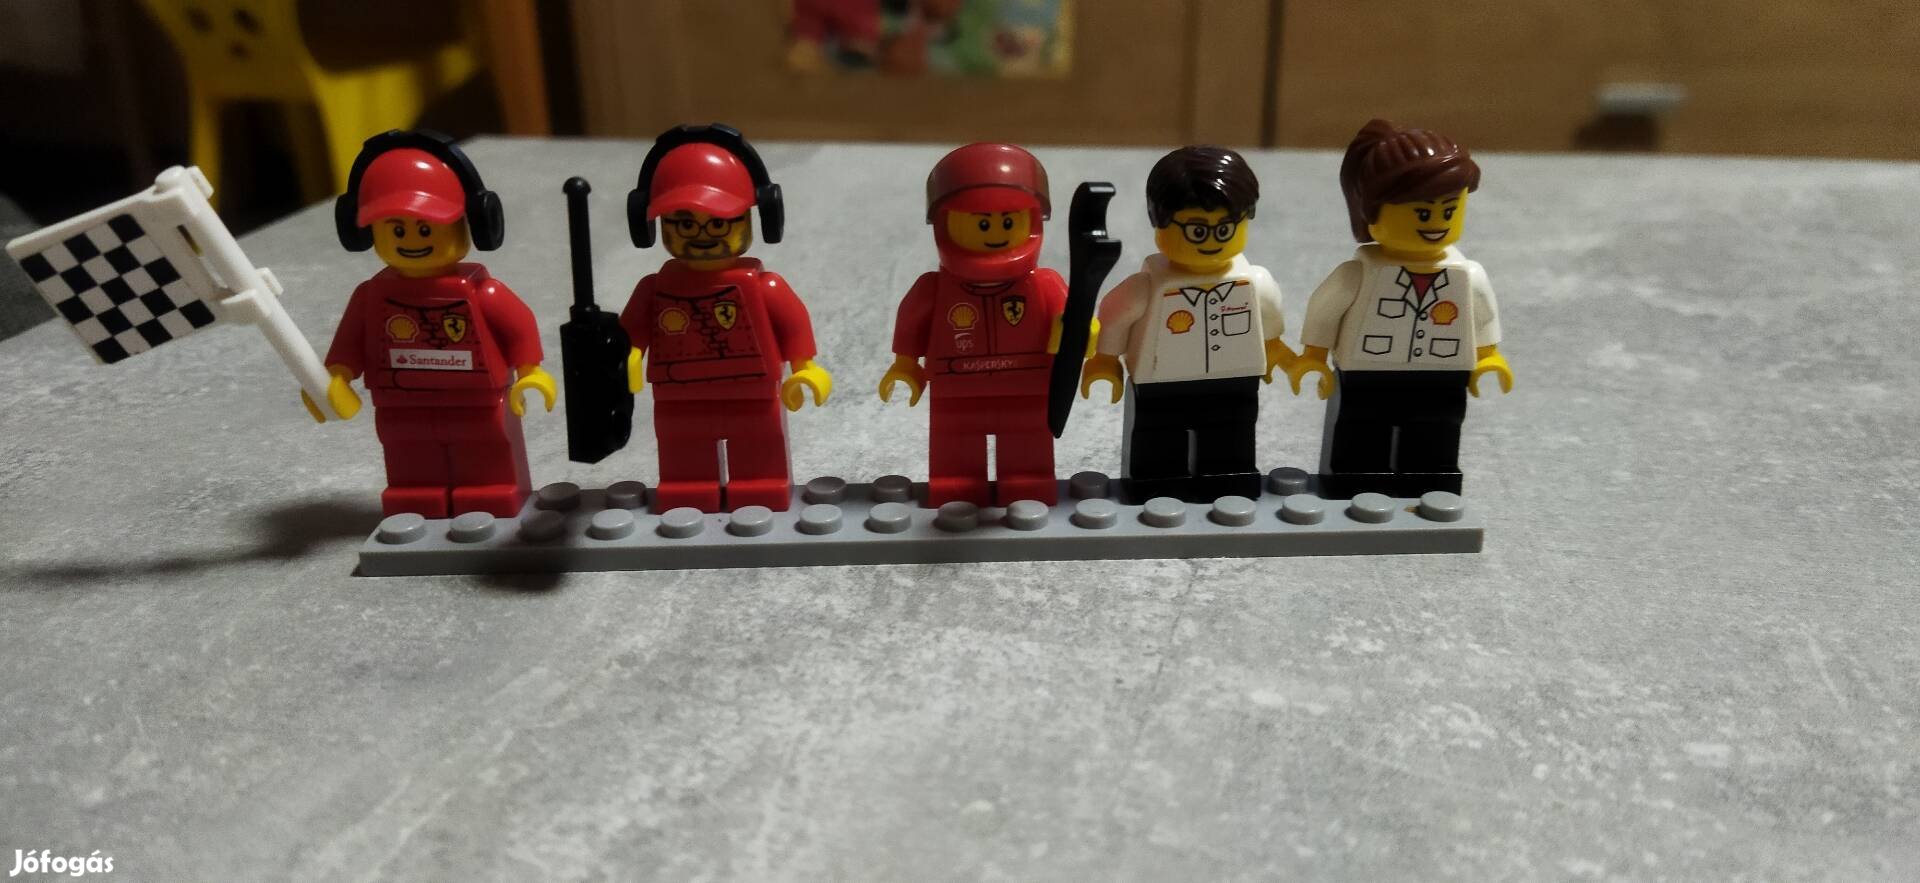 Lego Shell és Ferrari figurák 5db